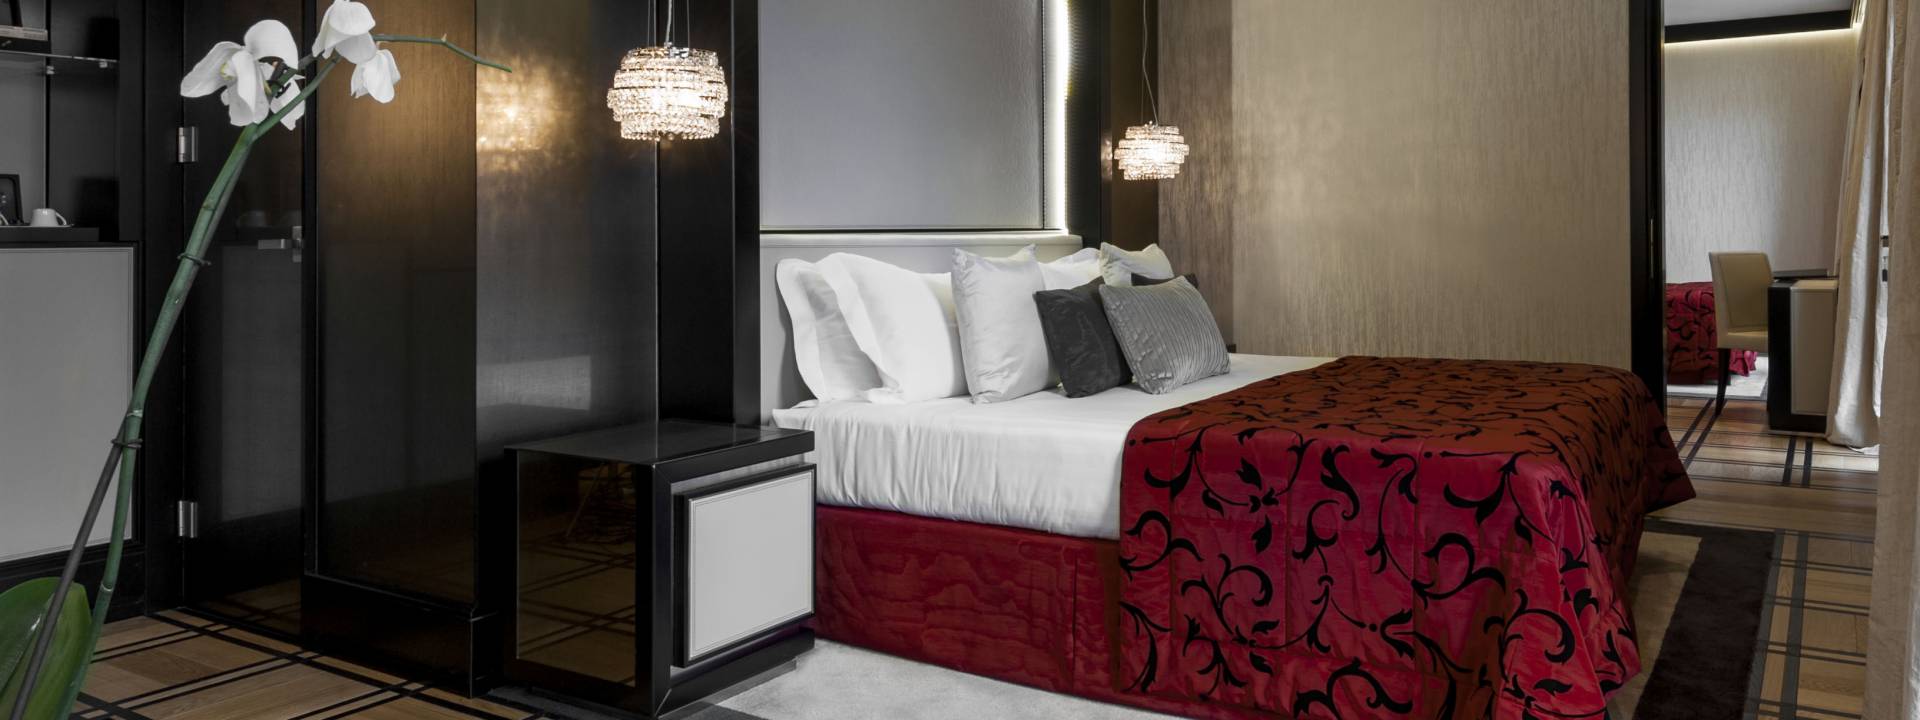 Carlton Hotel, luxury bedroom